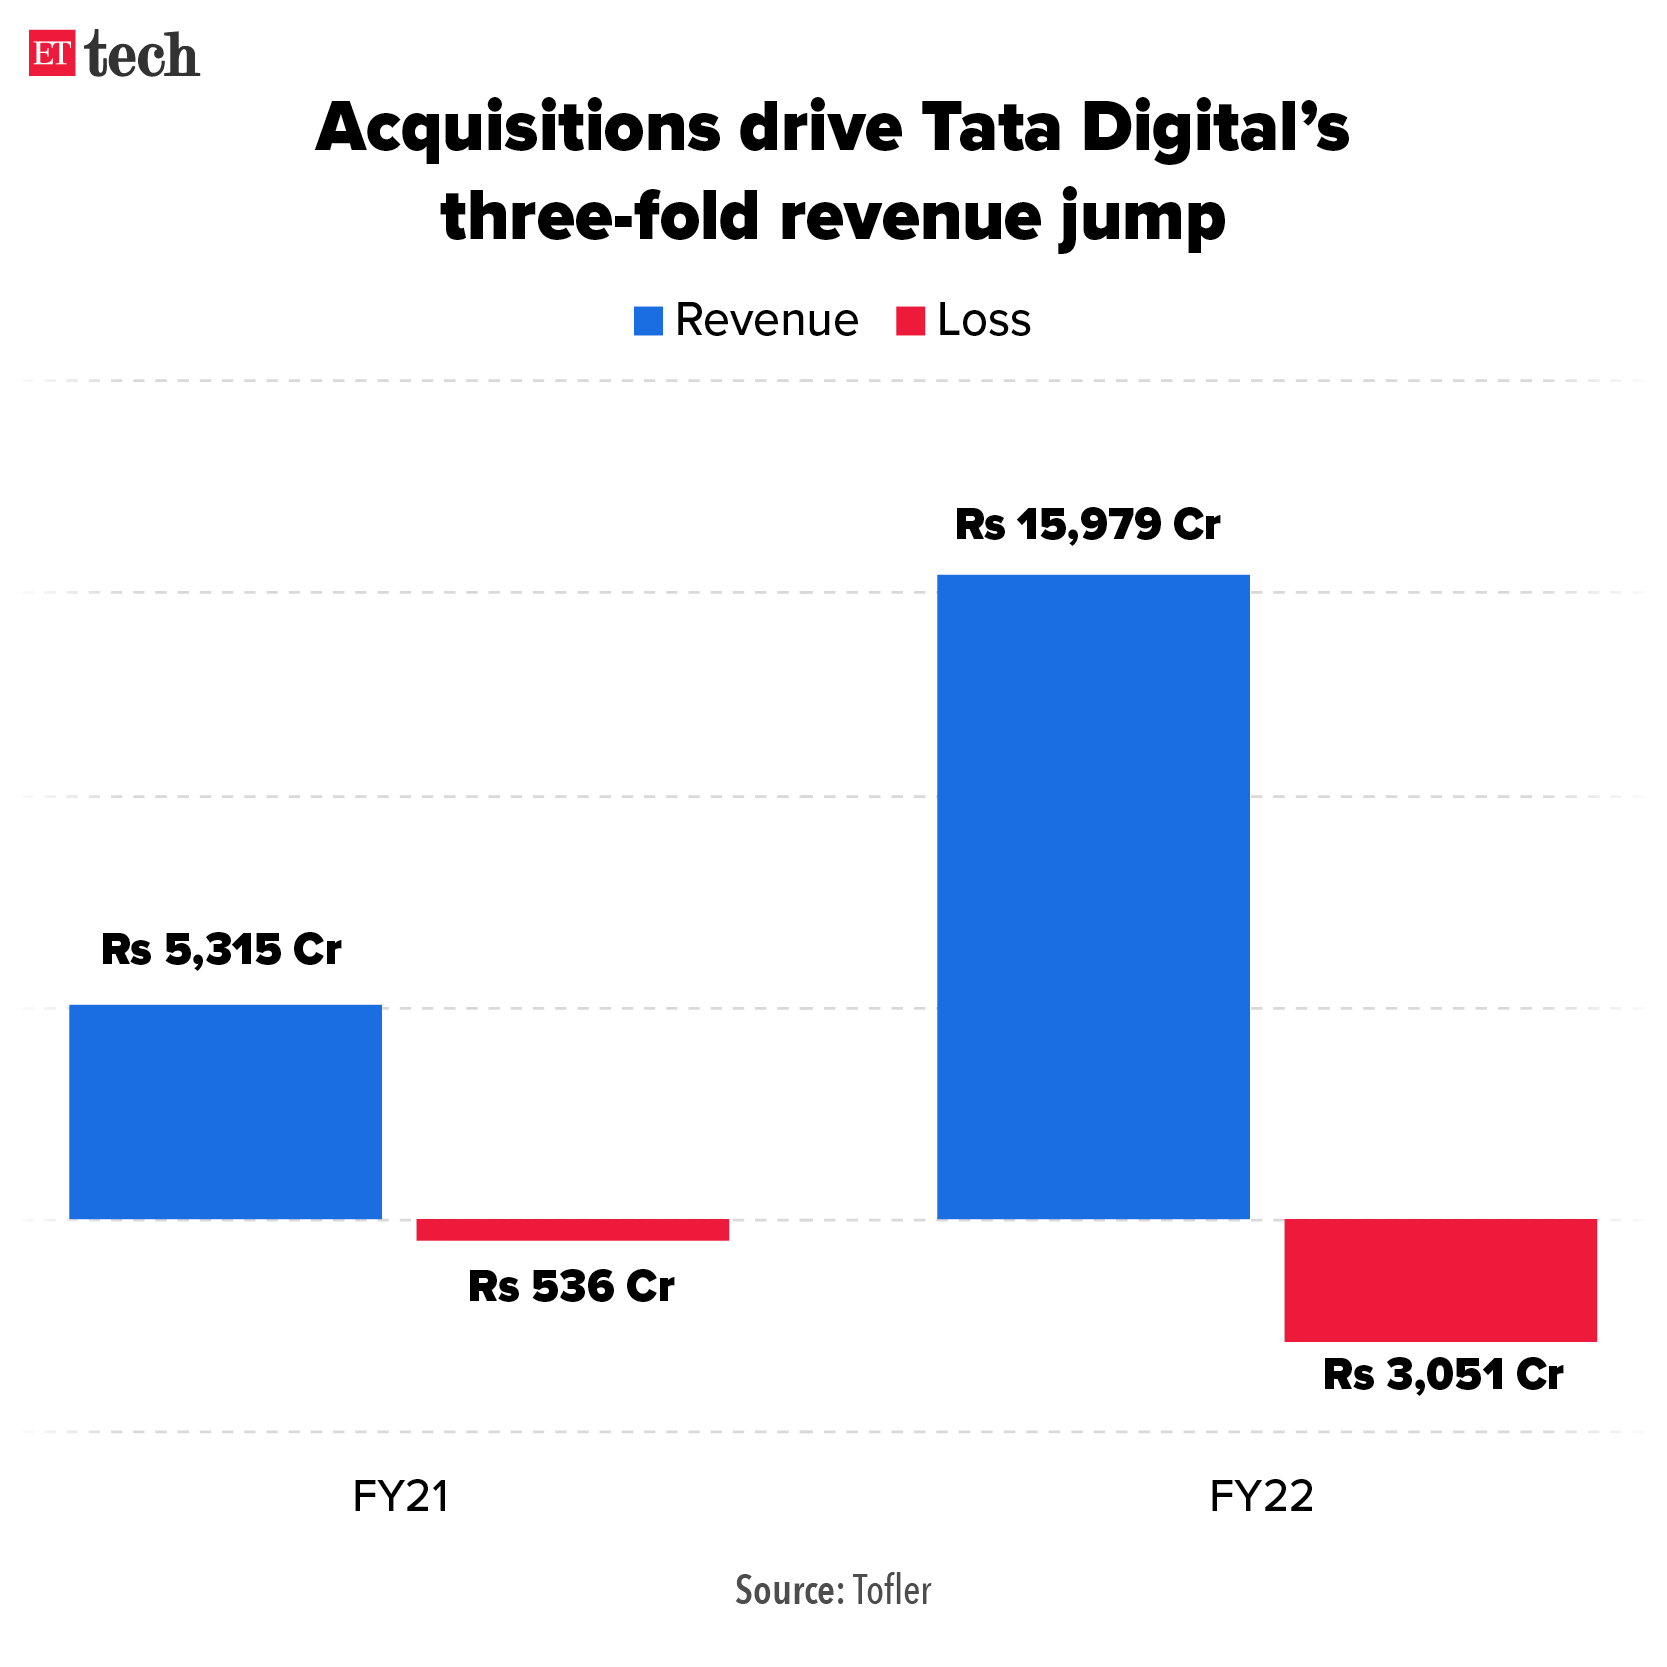 Tata Digital acquisitions